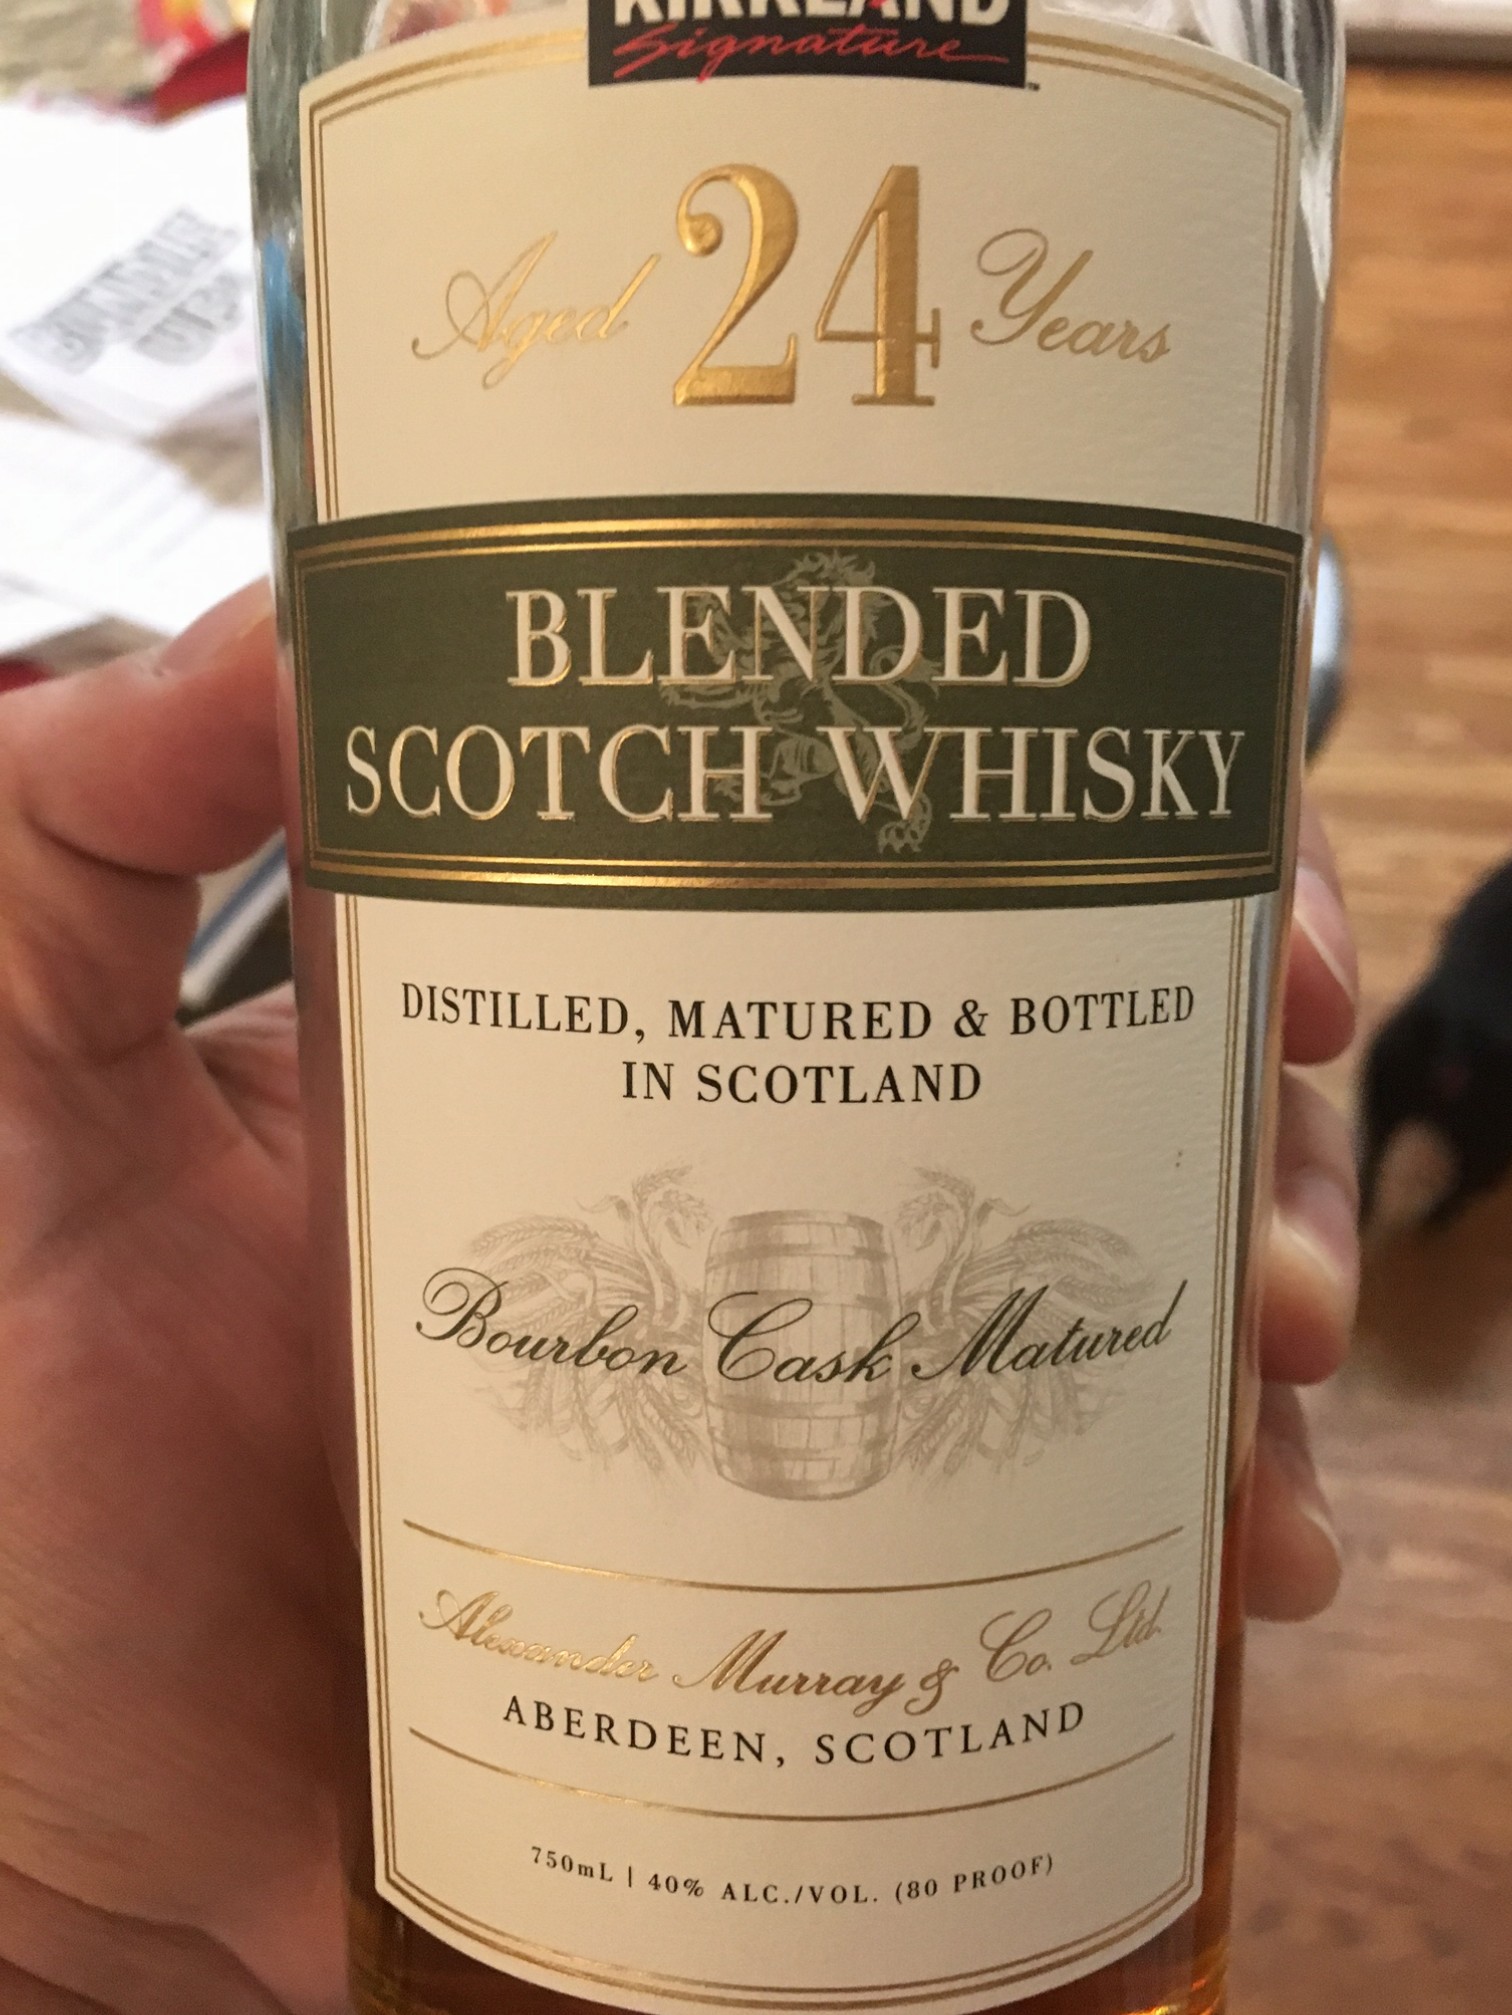 Kirkland Blended Scotch Whisky